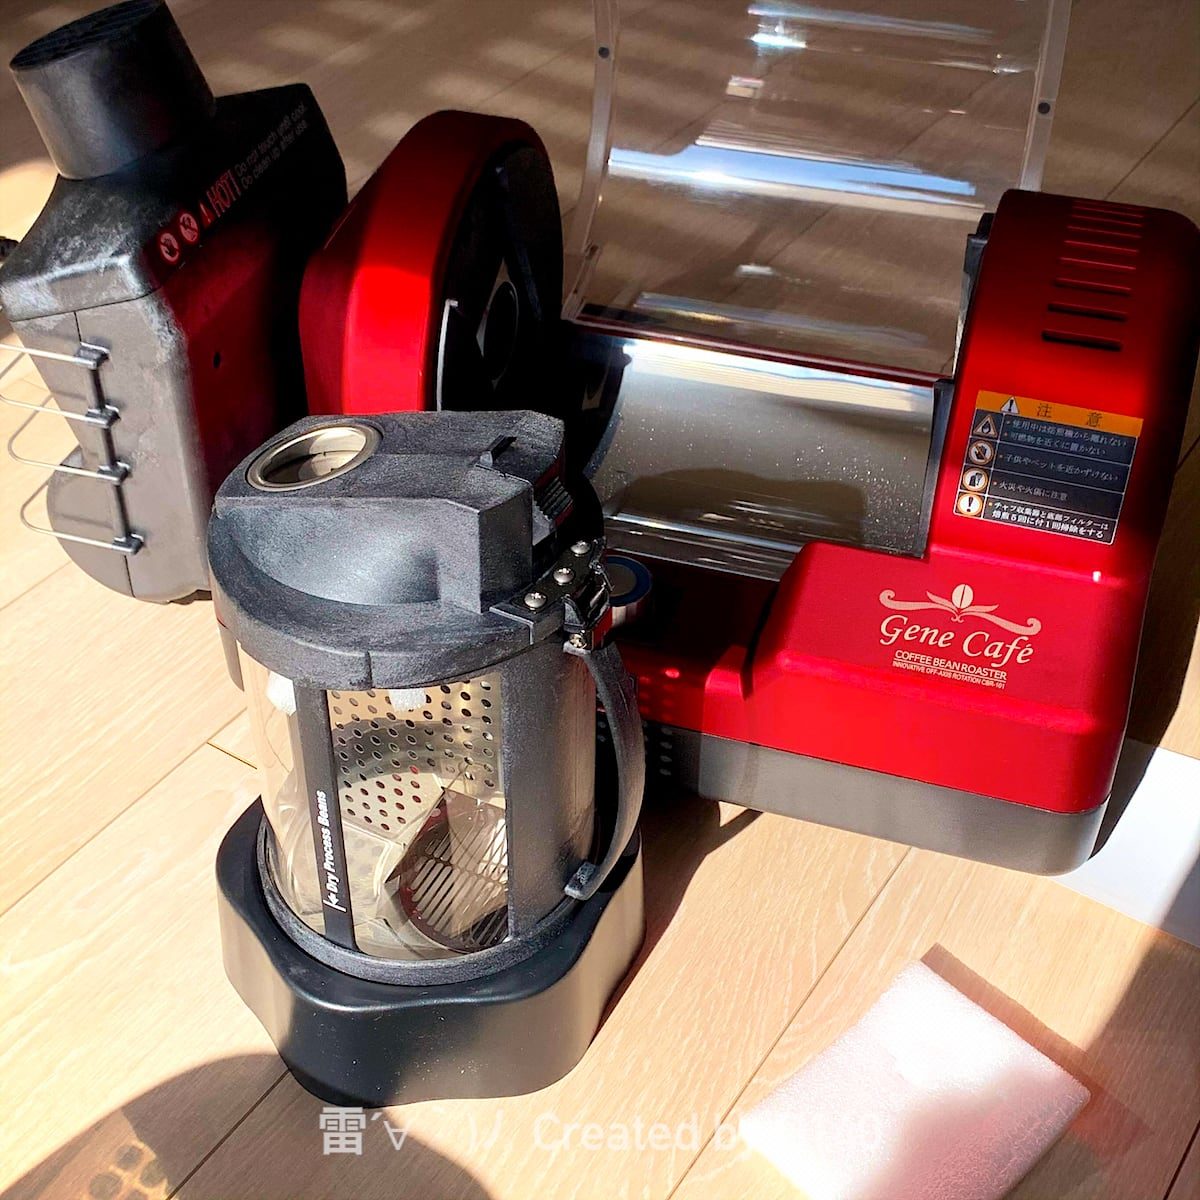 Gene Cafe ジェネカフェ Coffee Bean Roaster コーヒービーンロースター Black 黒 CBR-101A JPN 熱風3D回転 電動焙煎機